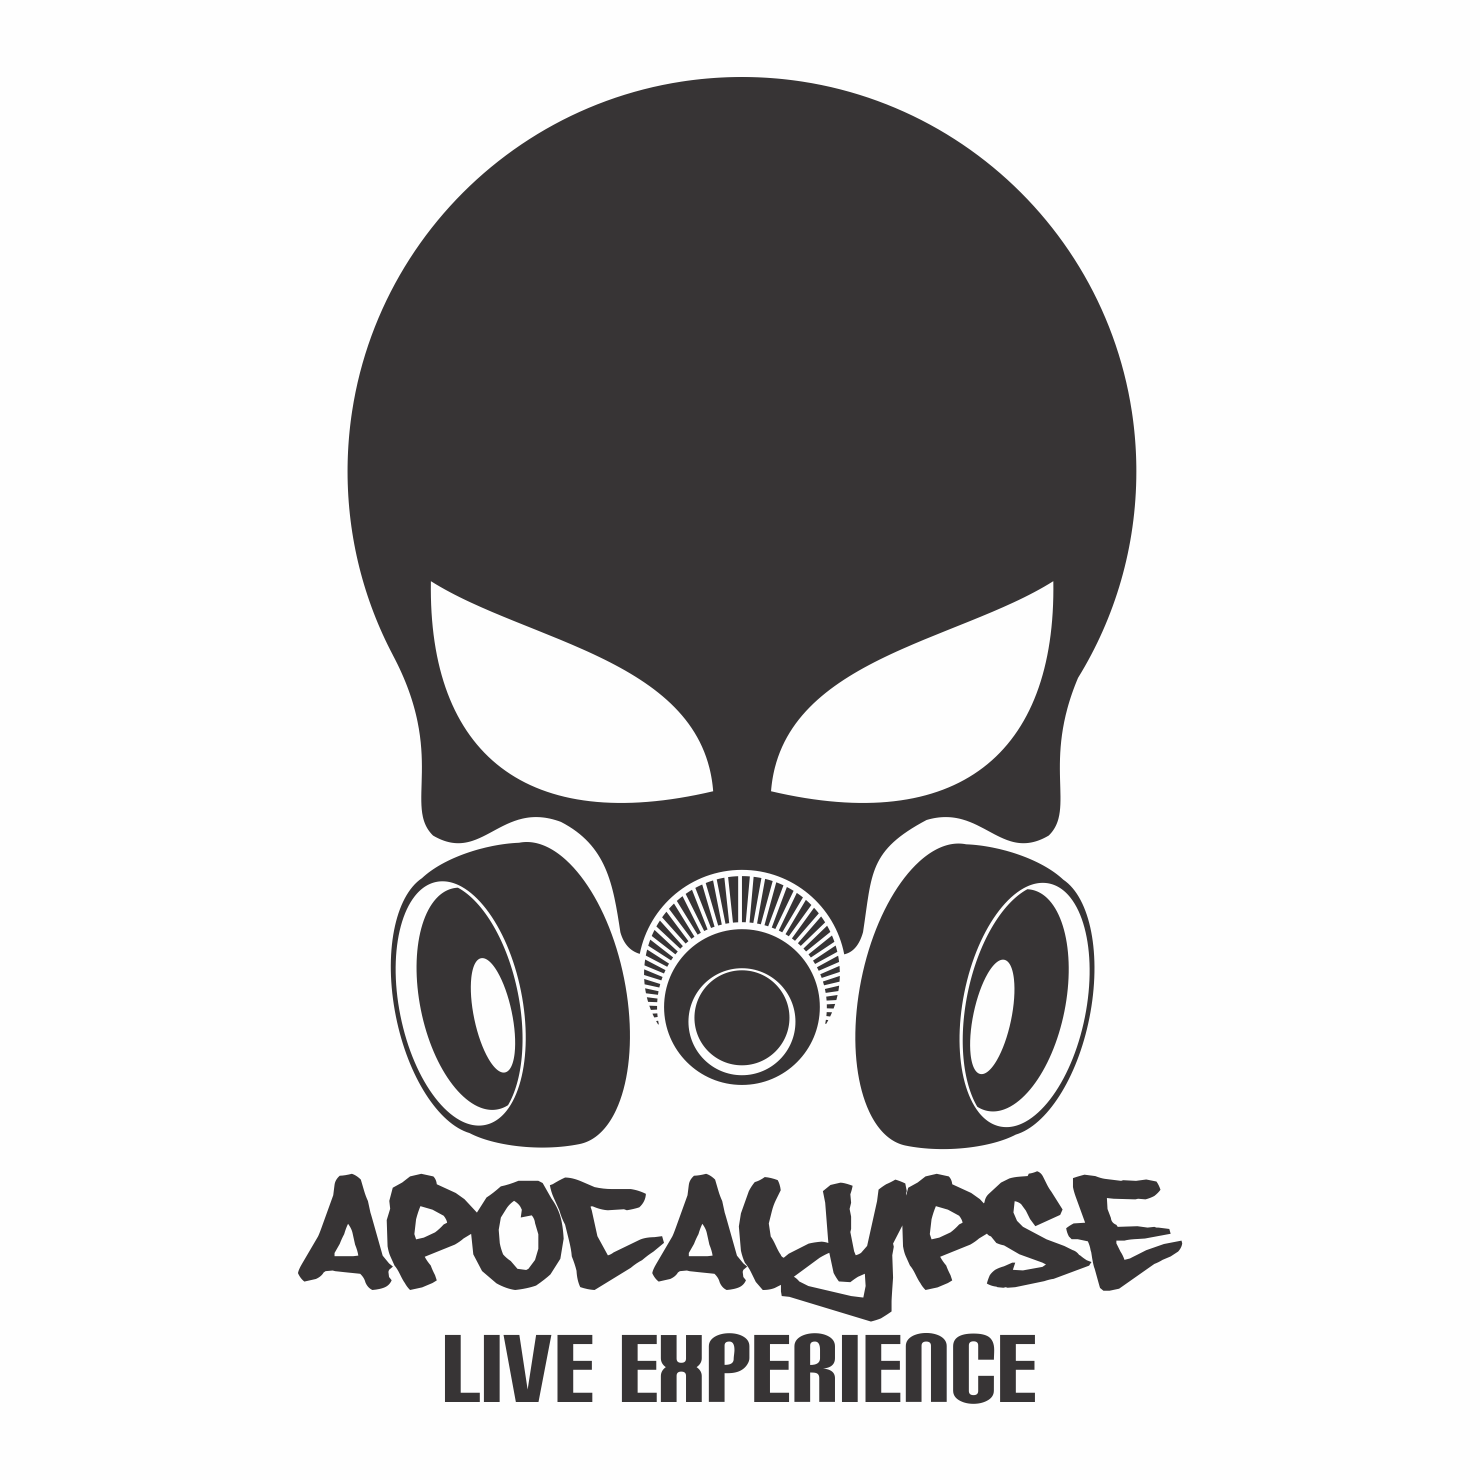 Apocalypse Logo - Elegant, Playful Logo Design for APOCALYPSE live experience